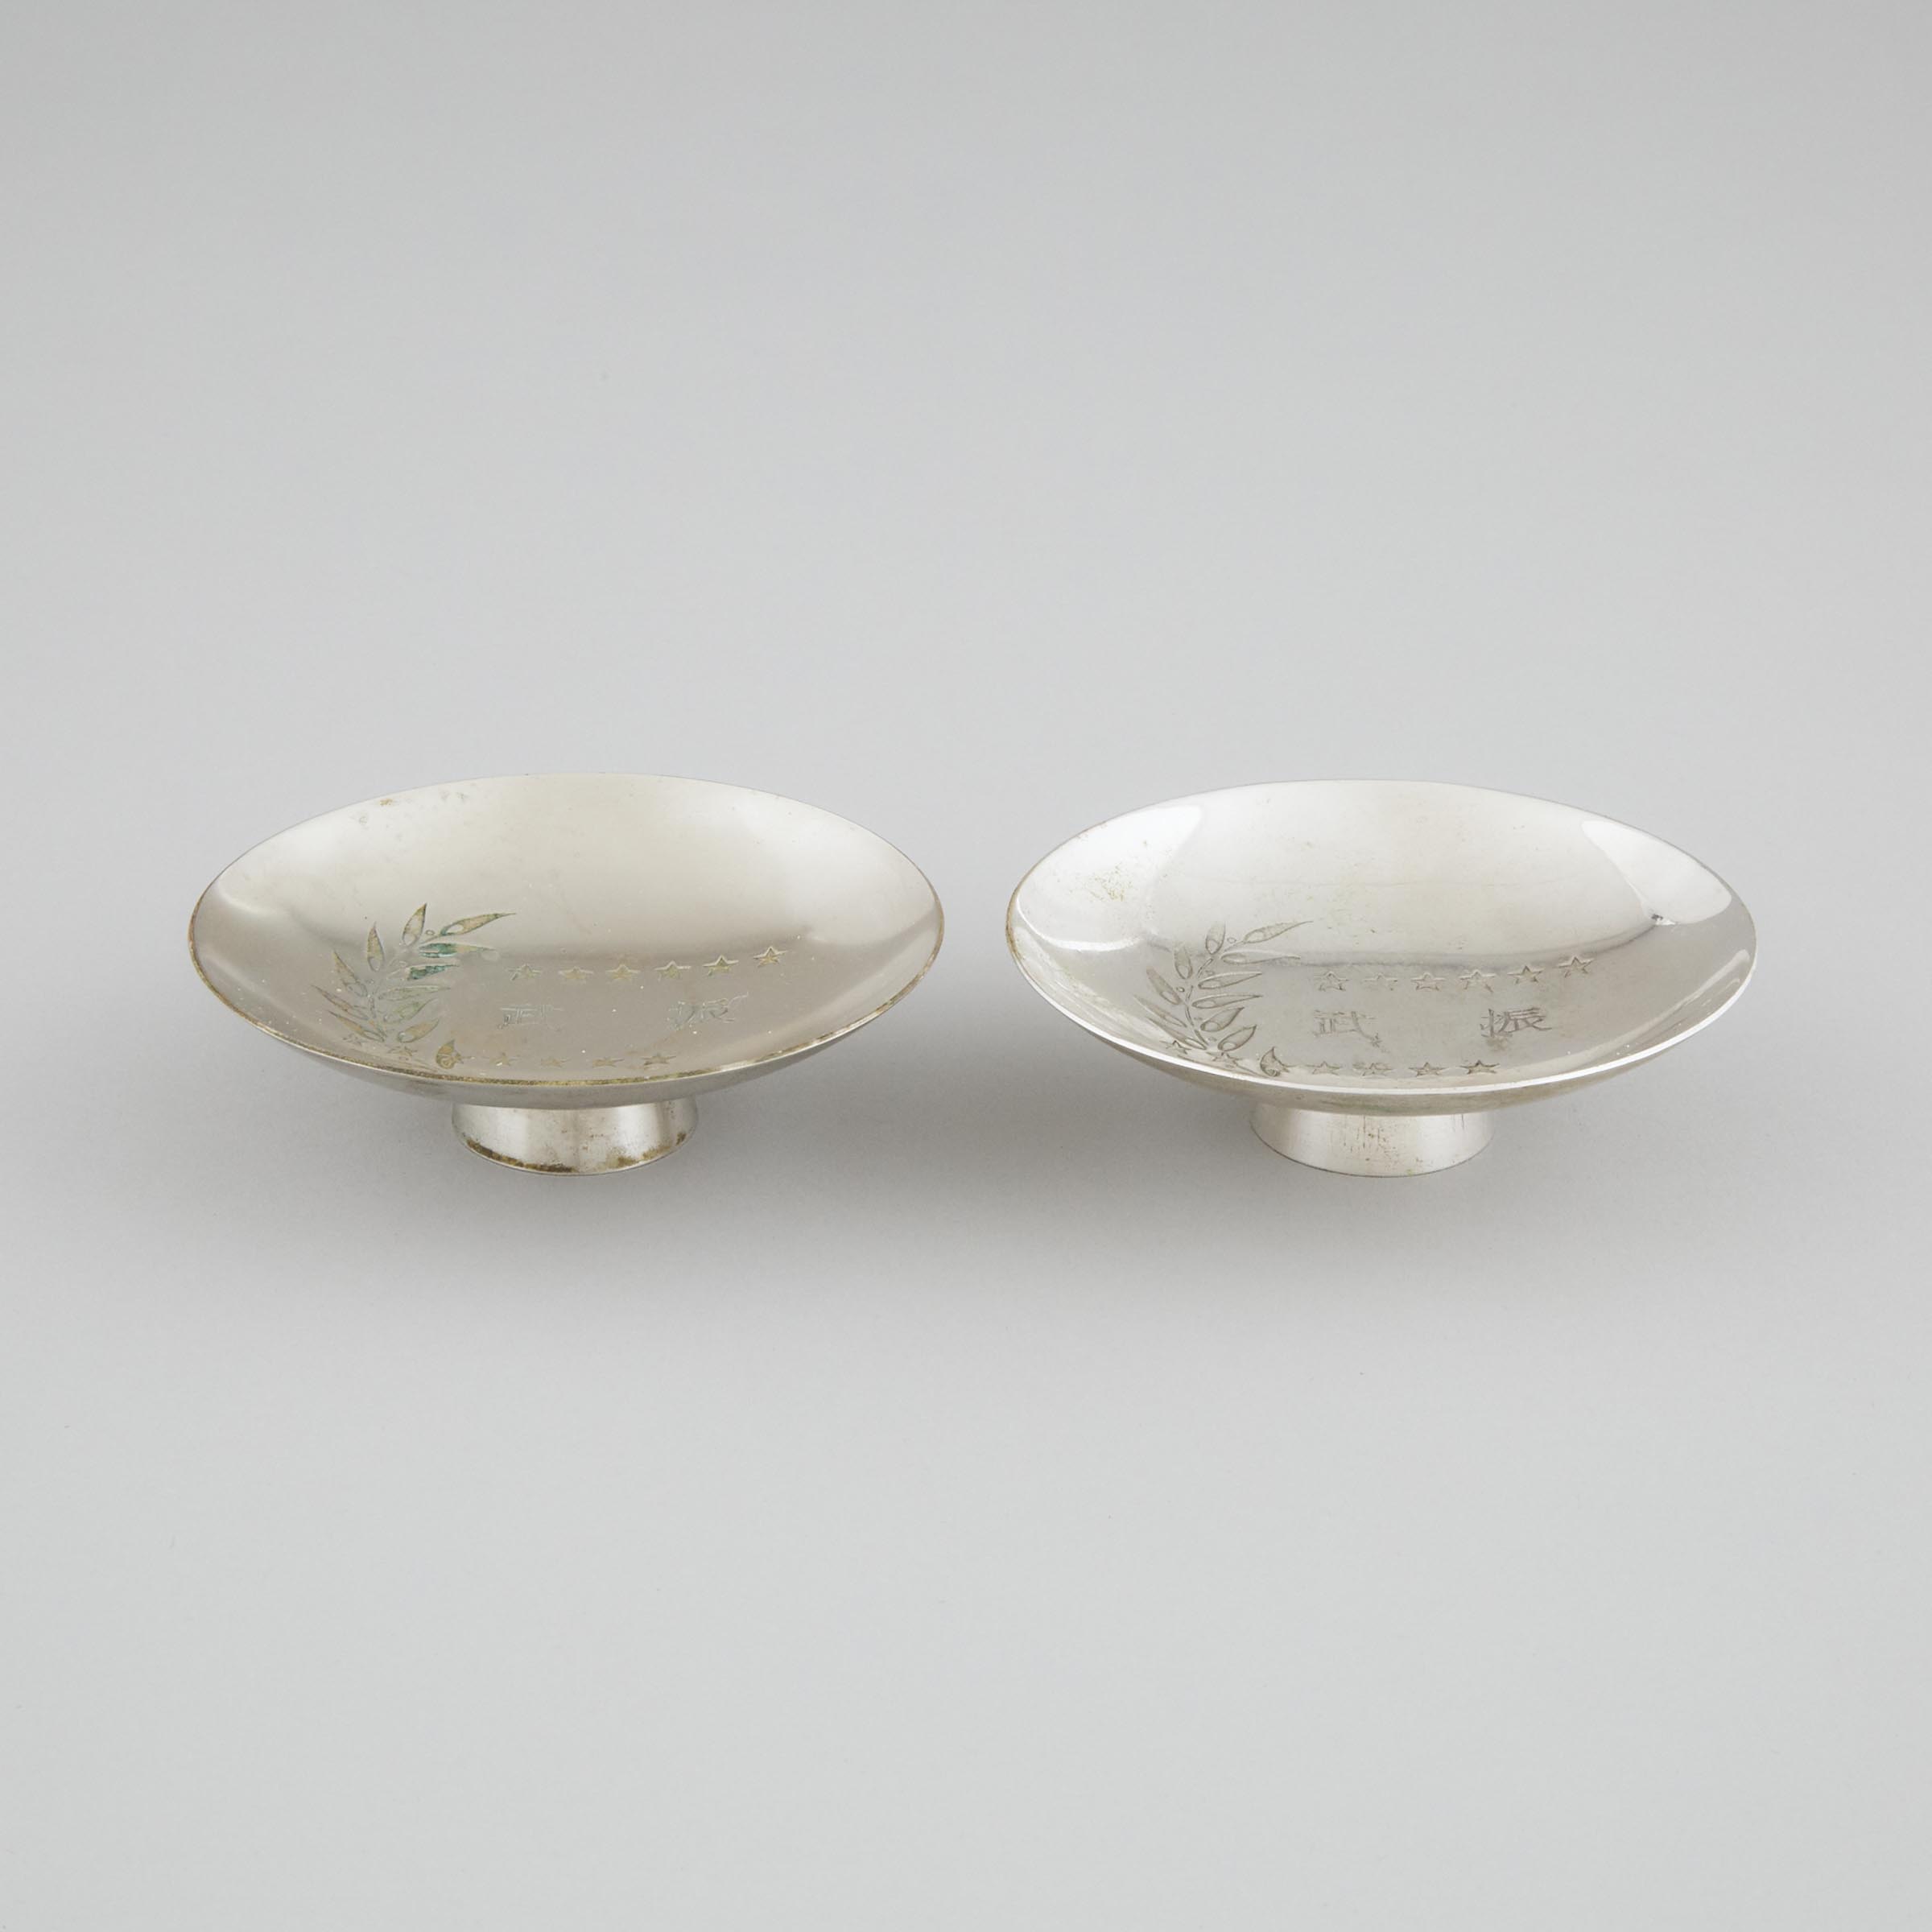 A Pair of Japanese Silver 'Mukden Incident' Triumphal Memorial Sake Cups (Guinomi), Circa 1932